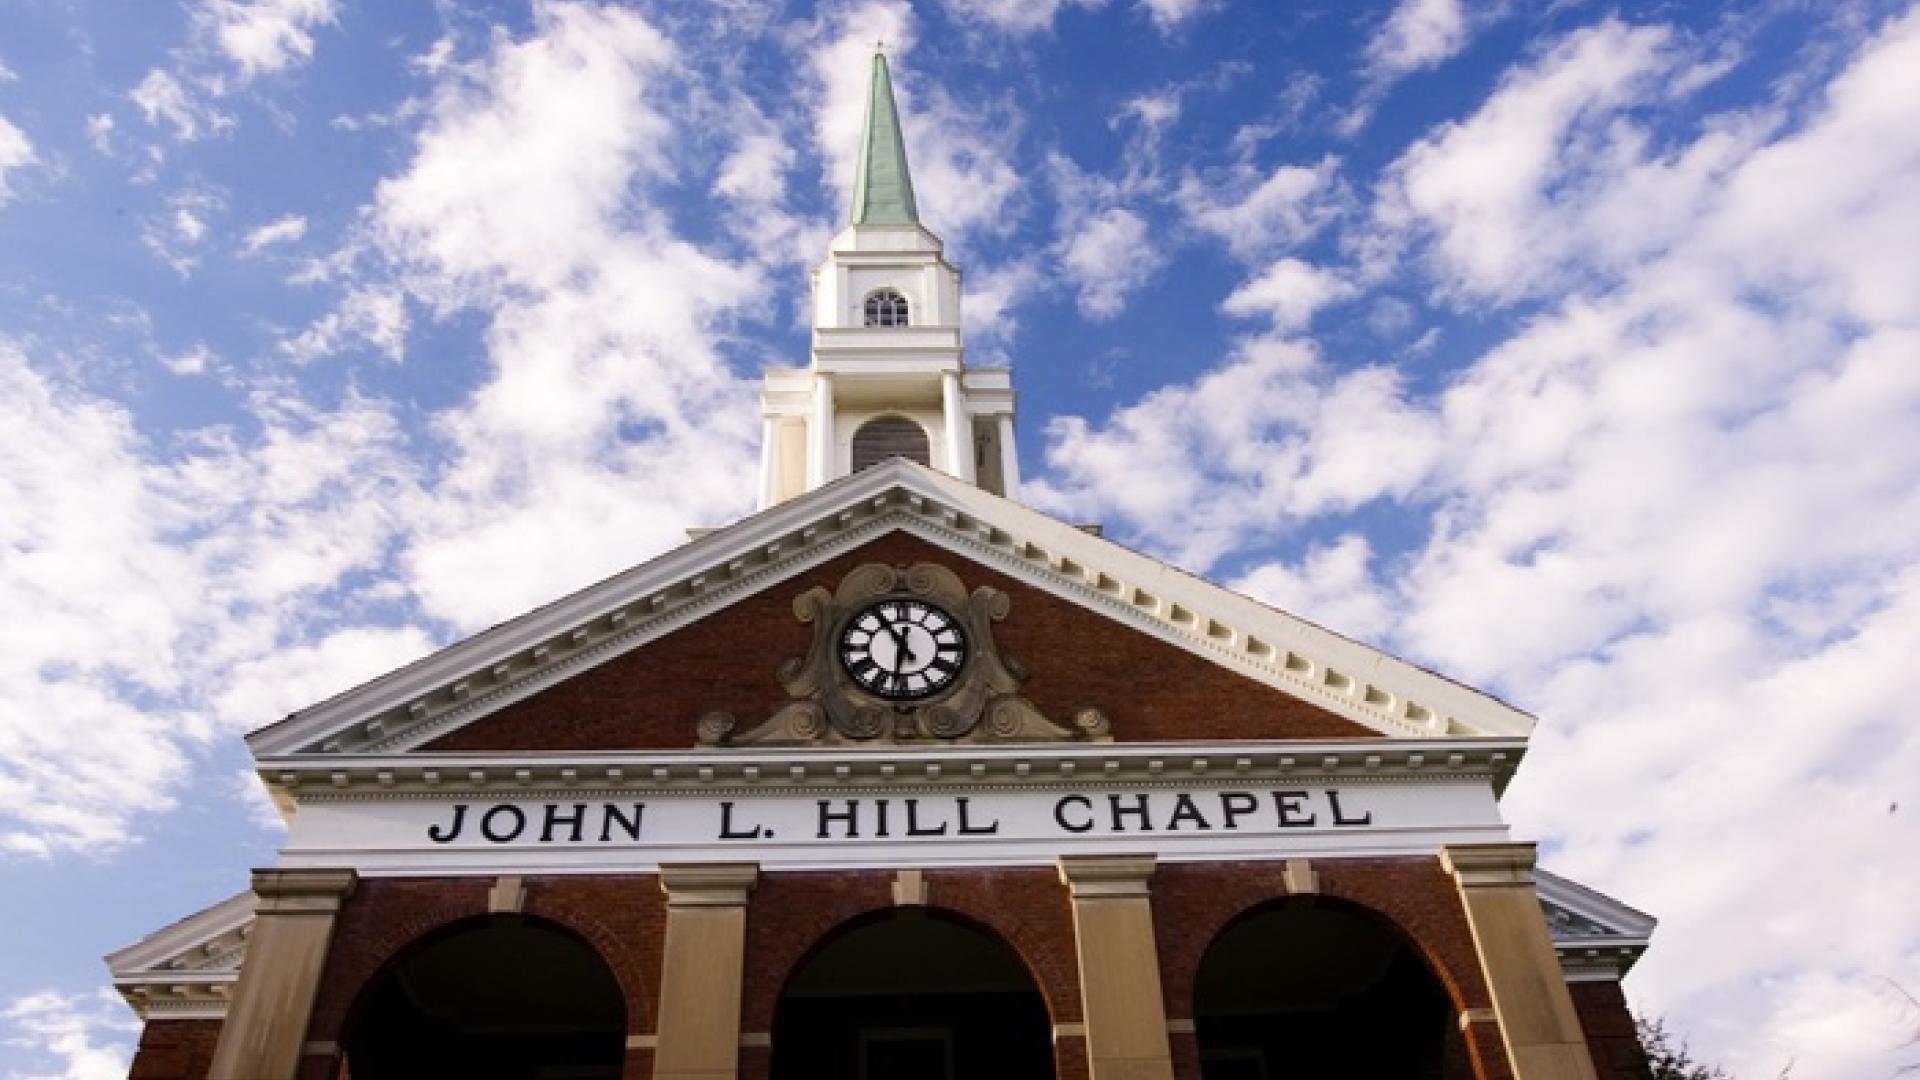 John L. Hill Chapel